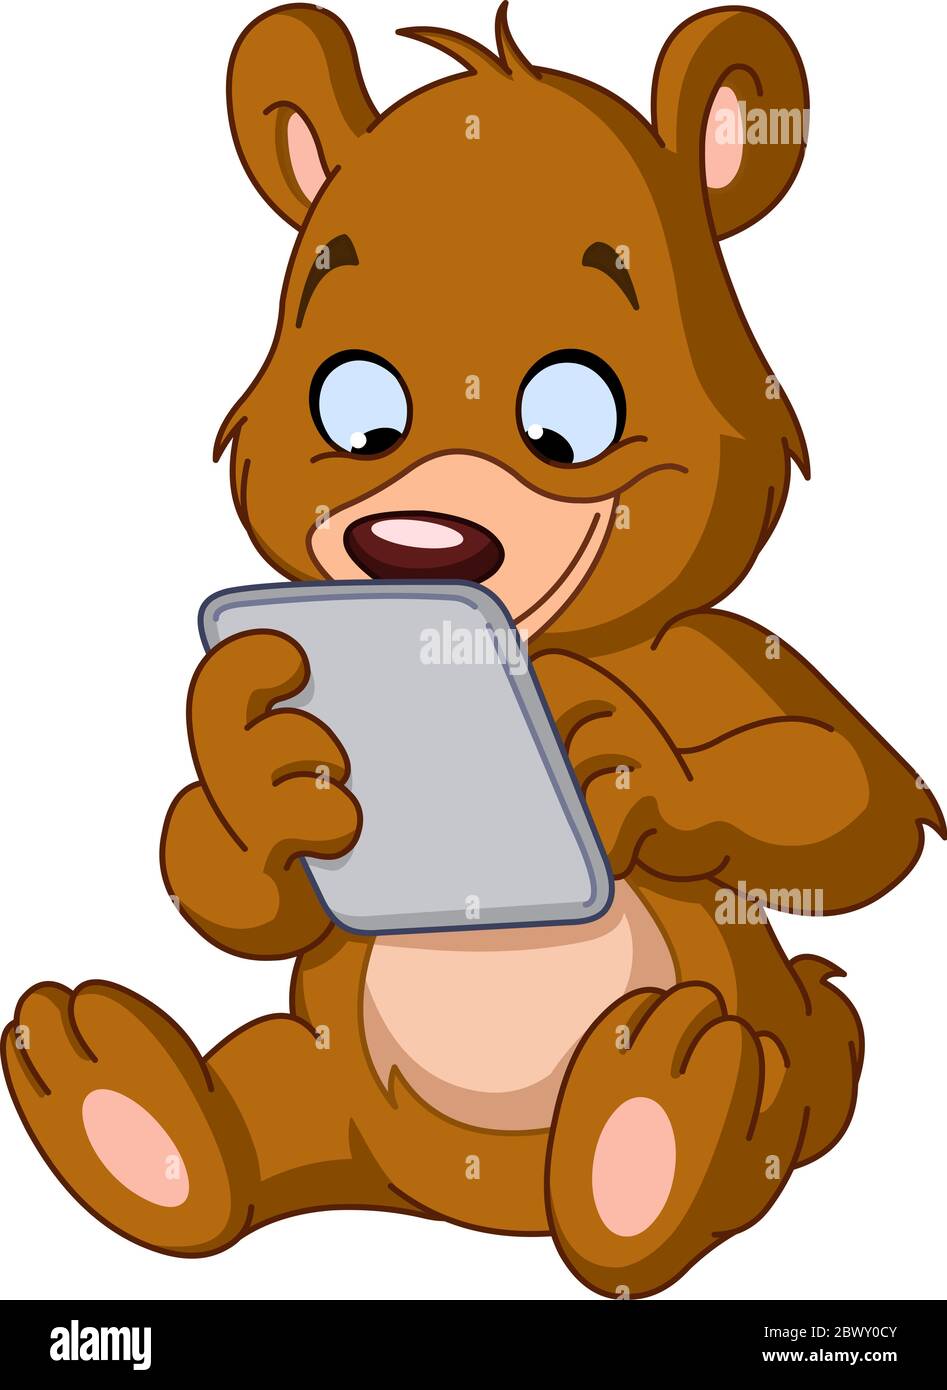 Sitting teddy bear using a tablet pc Stock Vector